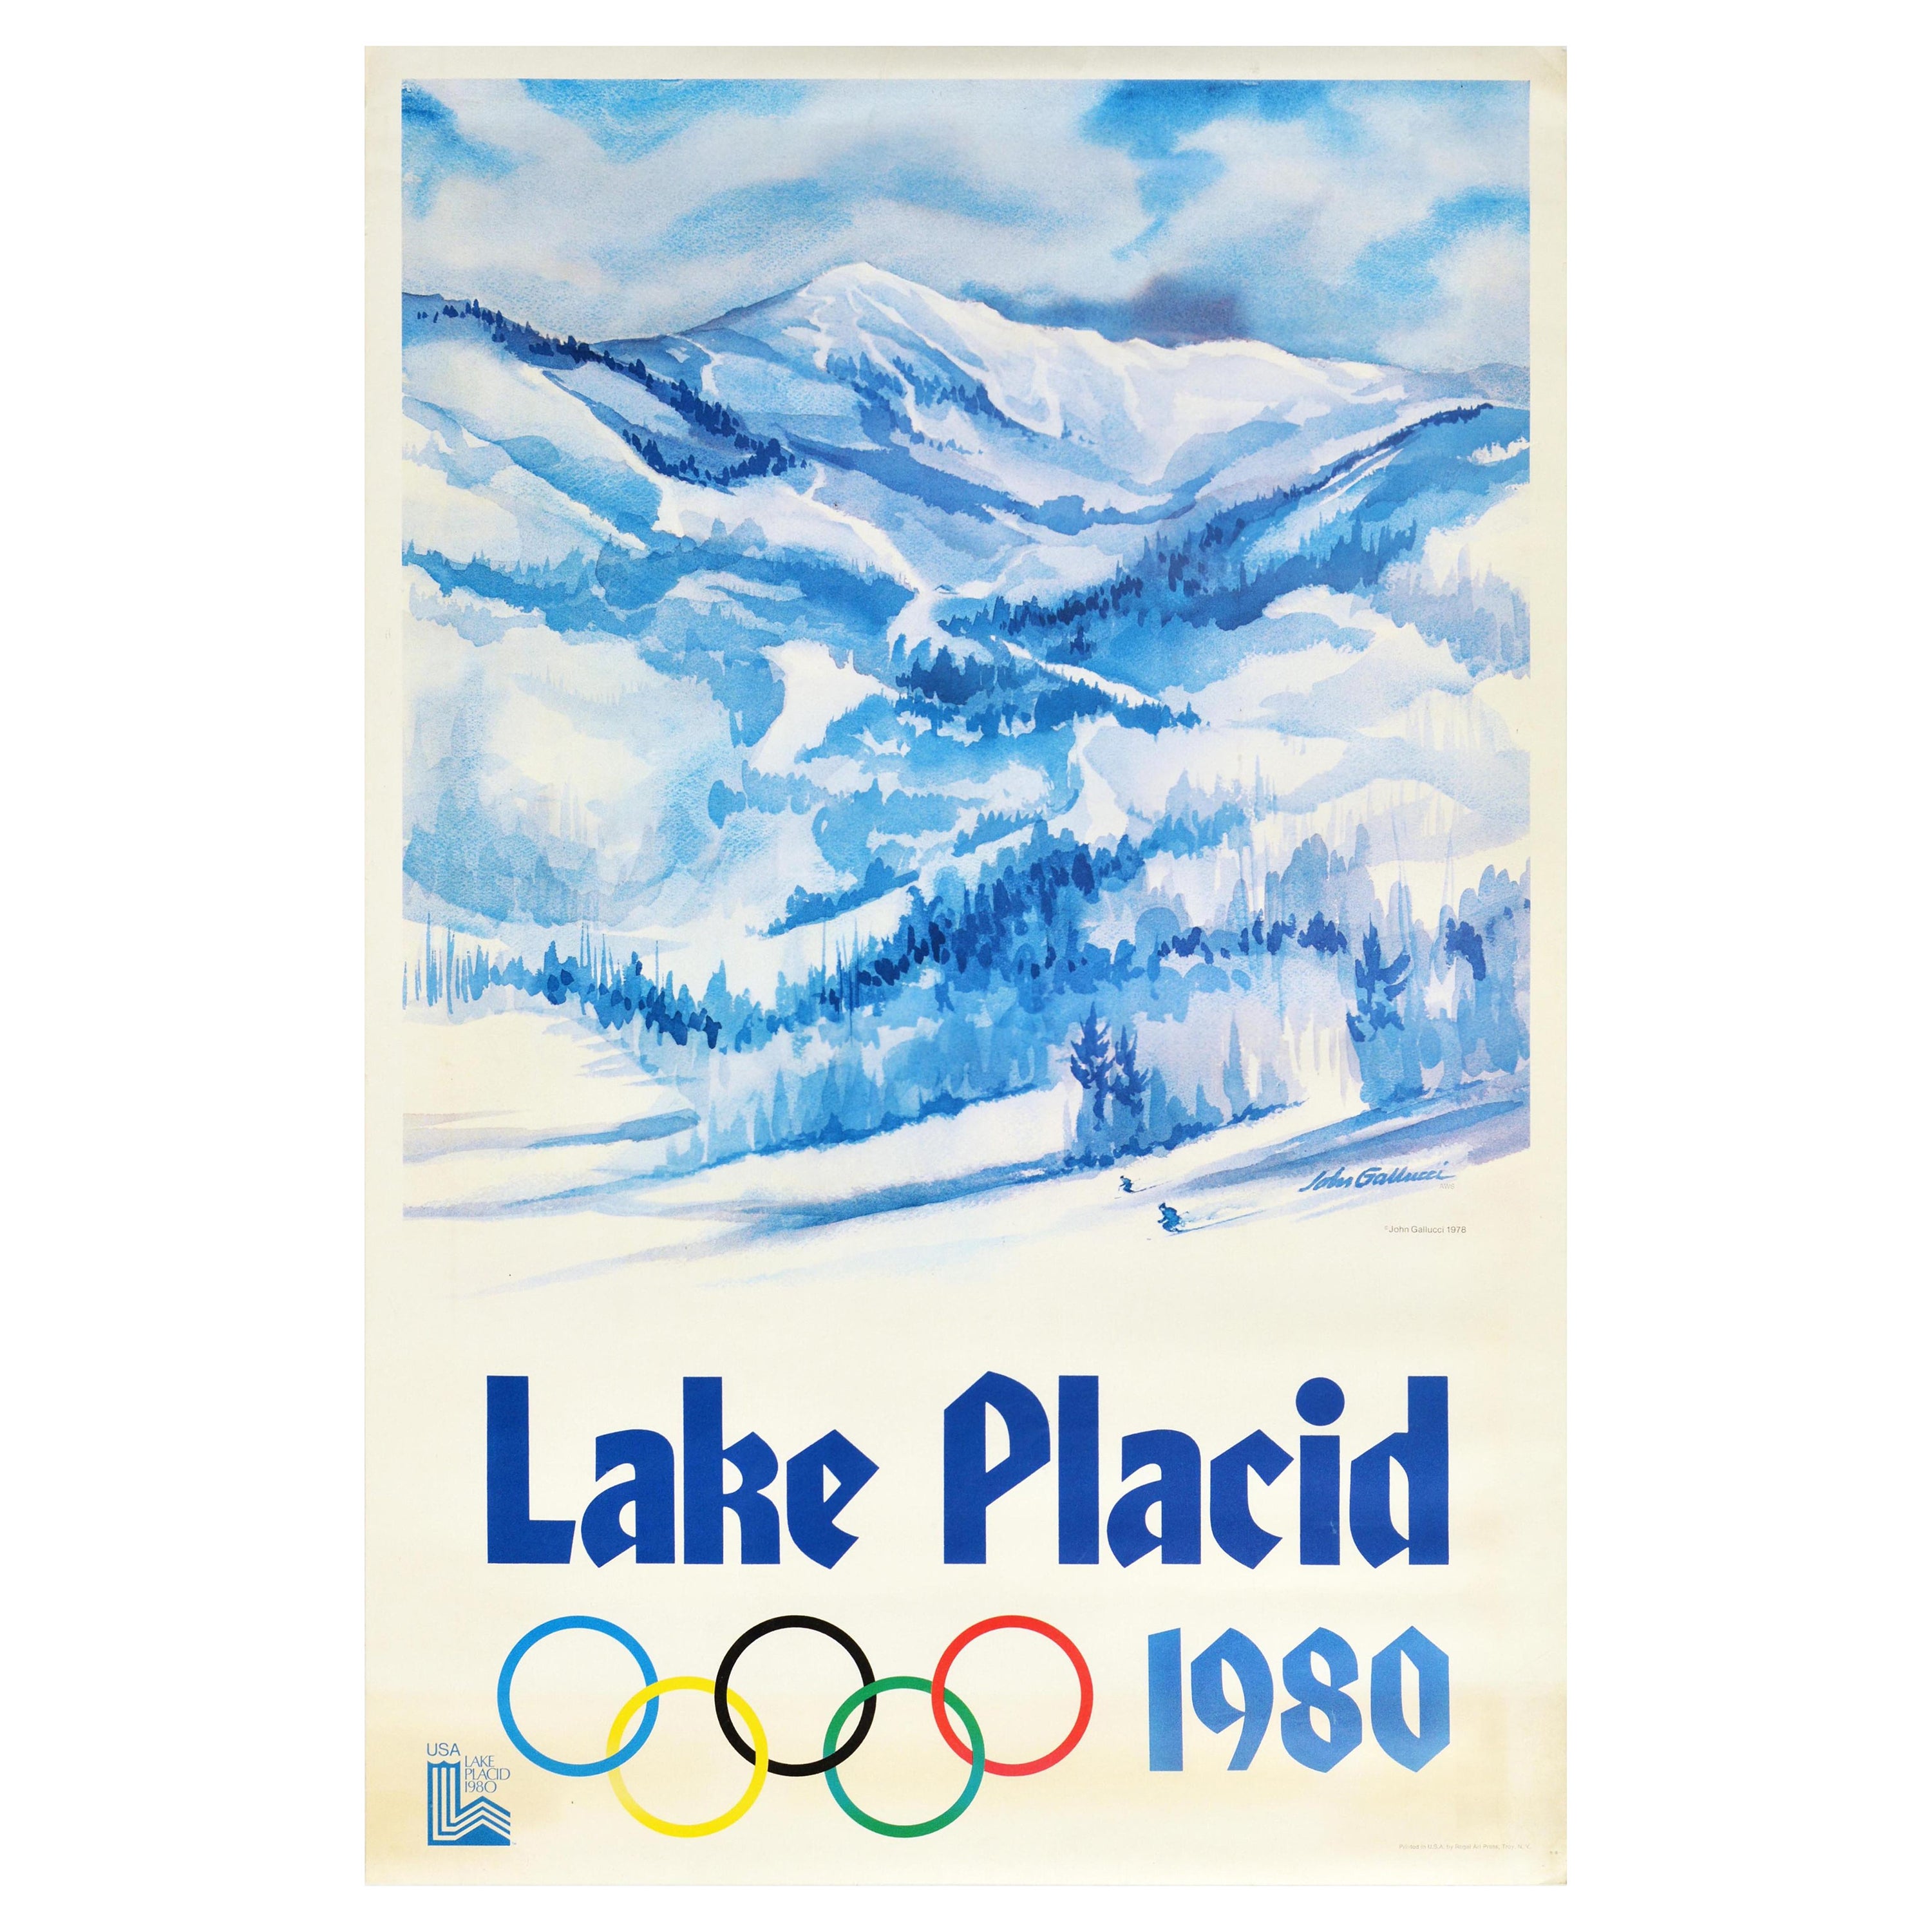 Original Vintage Sport Poster Lake Placid 1980 Winter Olympics Skiers Mountains